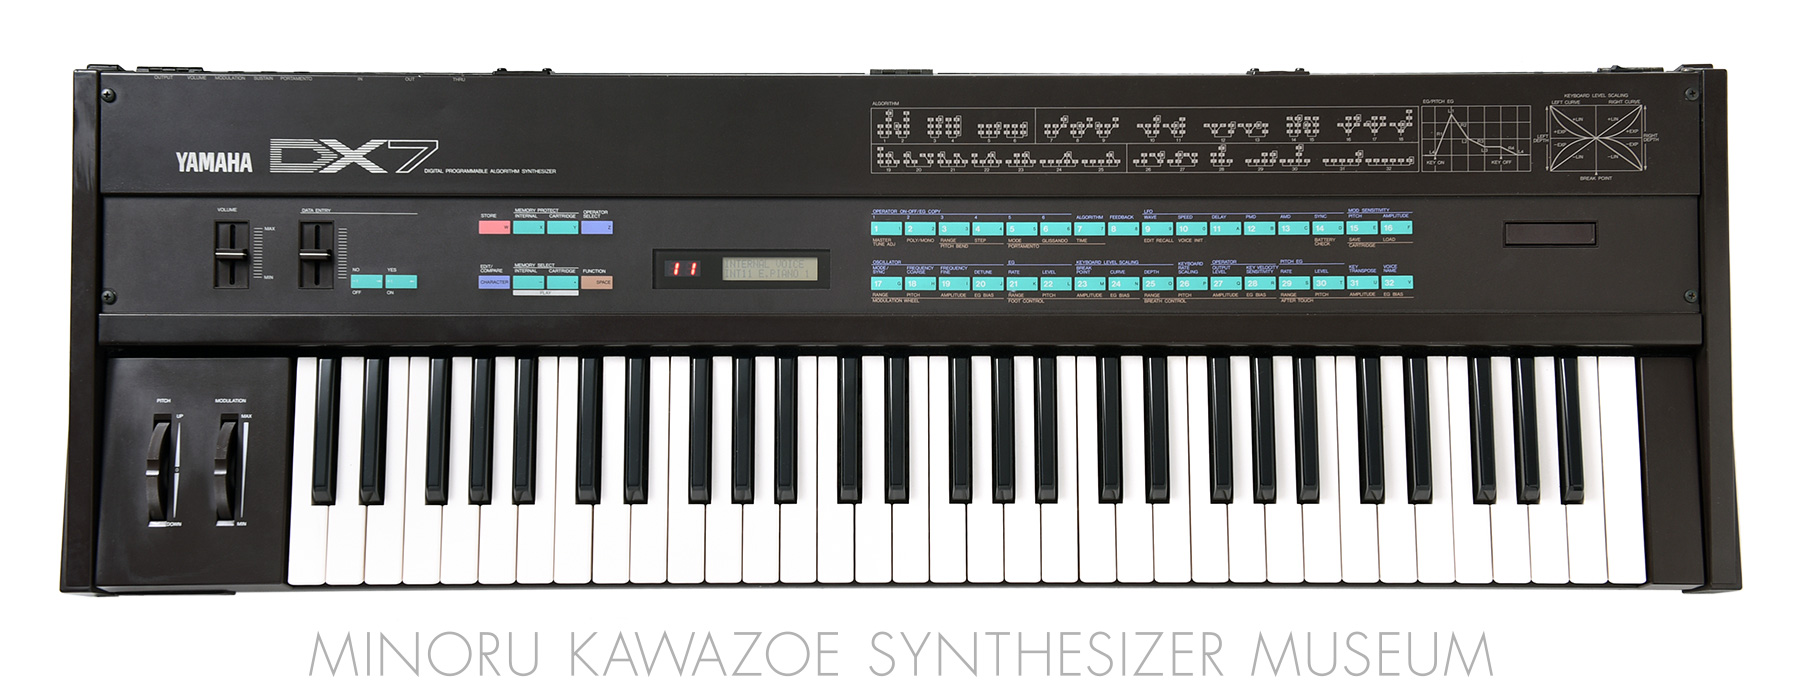 Minoru Kawazoe Synthesizer Museum - List